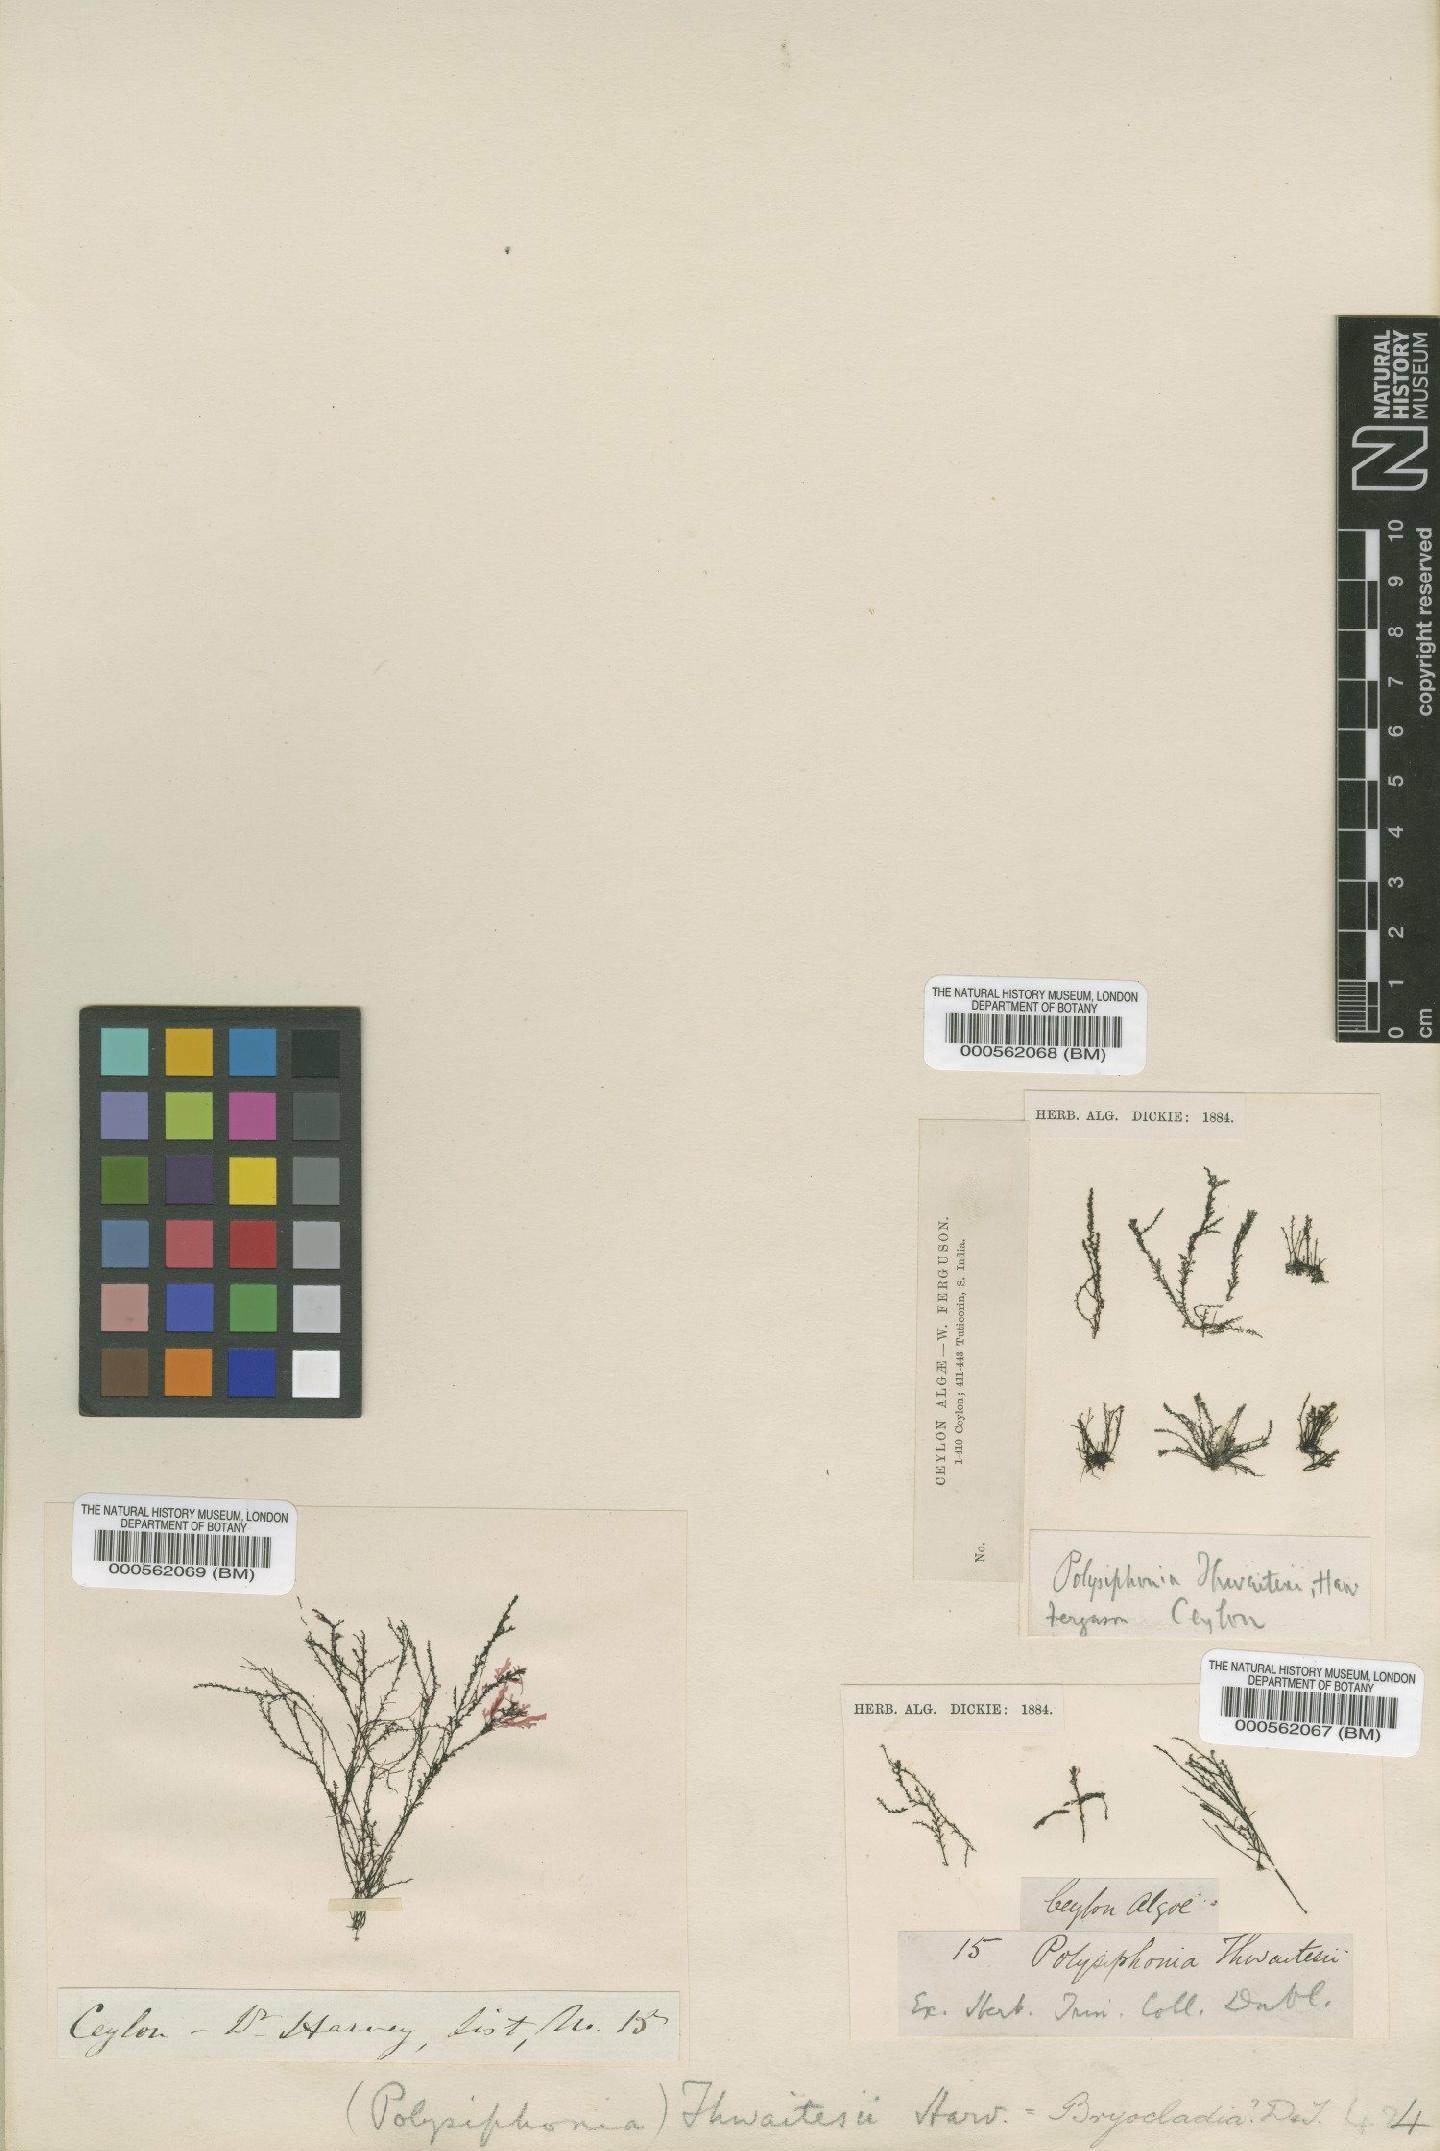 To NHMUK collection (Bryocladia thwaitesii (Hook.f. & Harv.) De Toni; Syntype; NHMUK:ecatalogue:4834305)